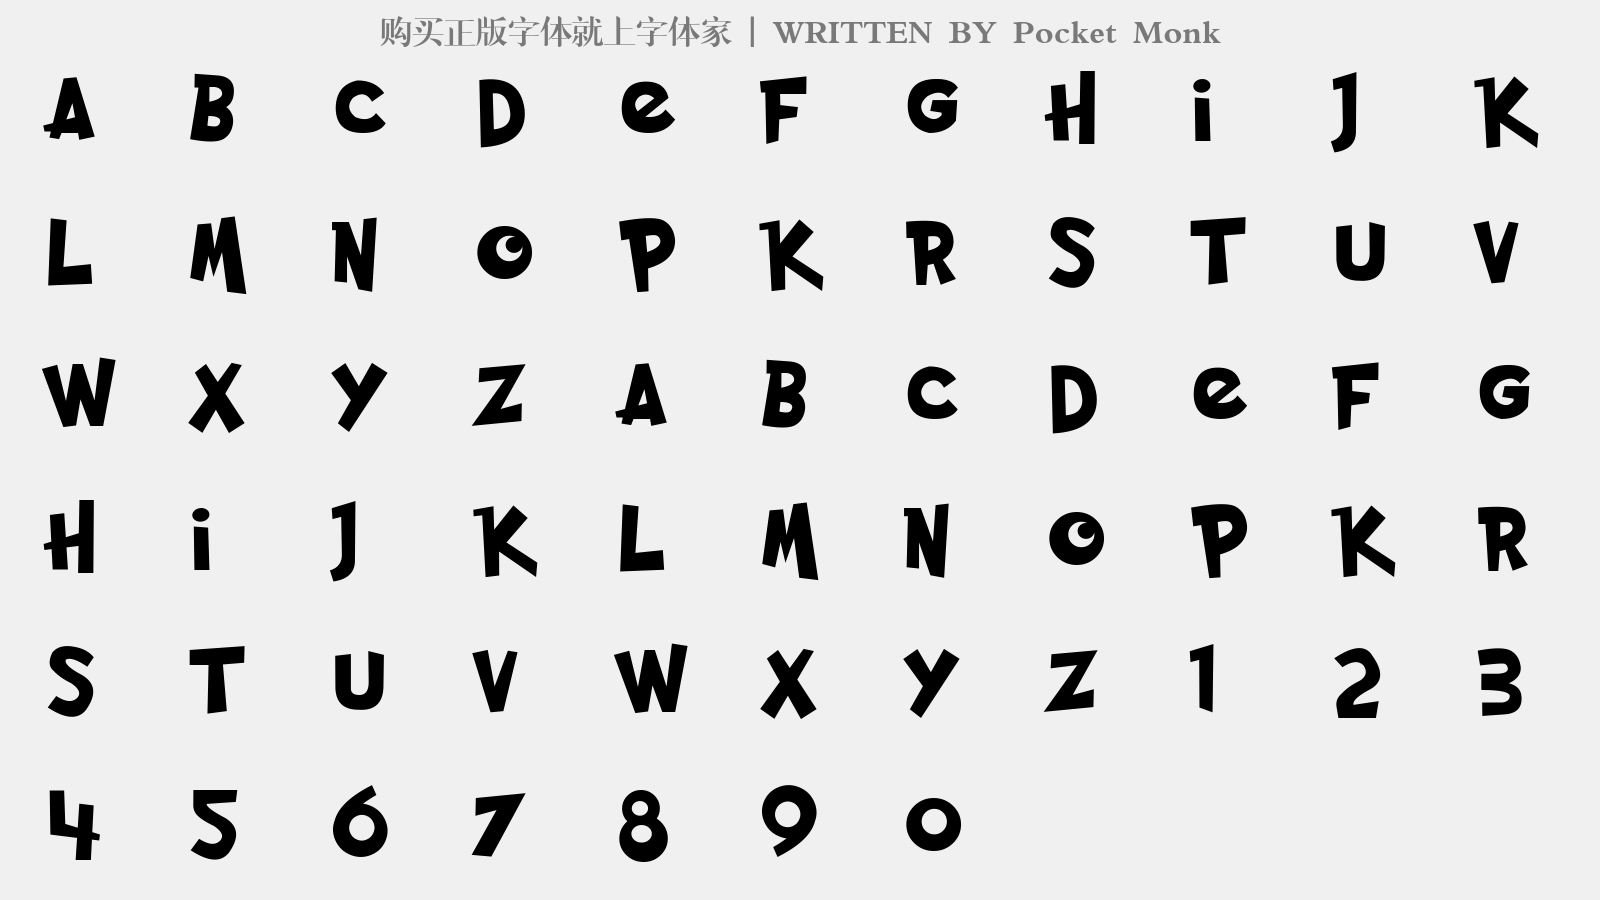 Pocket Monk - 大写字母/小写字母/数字